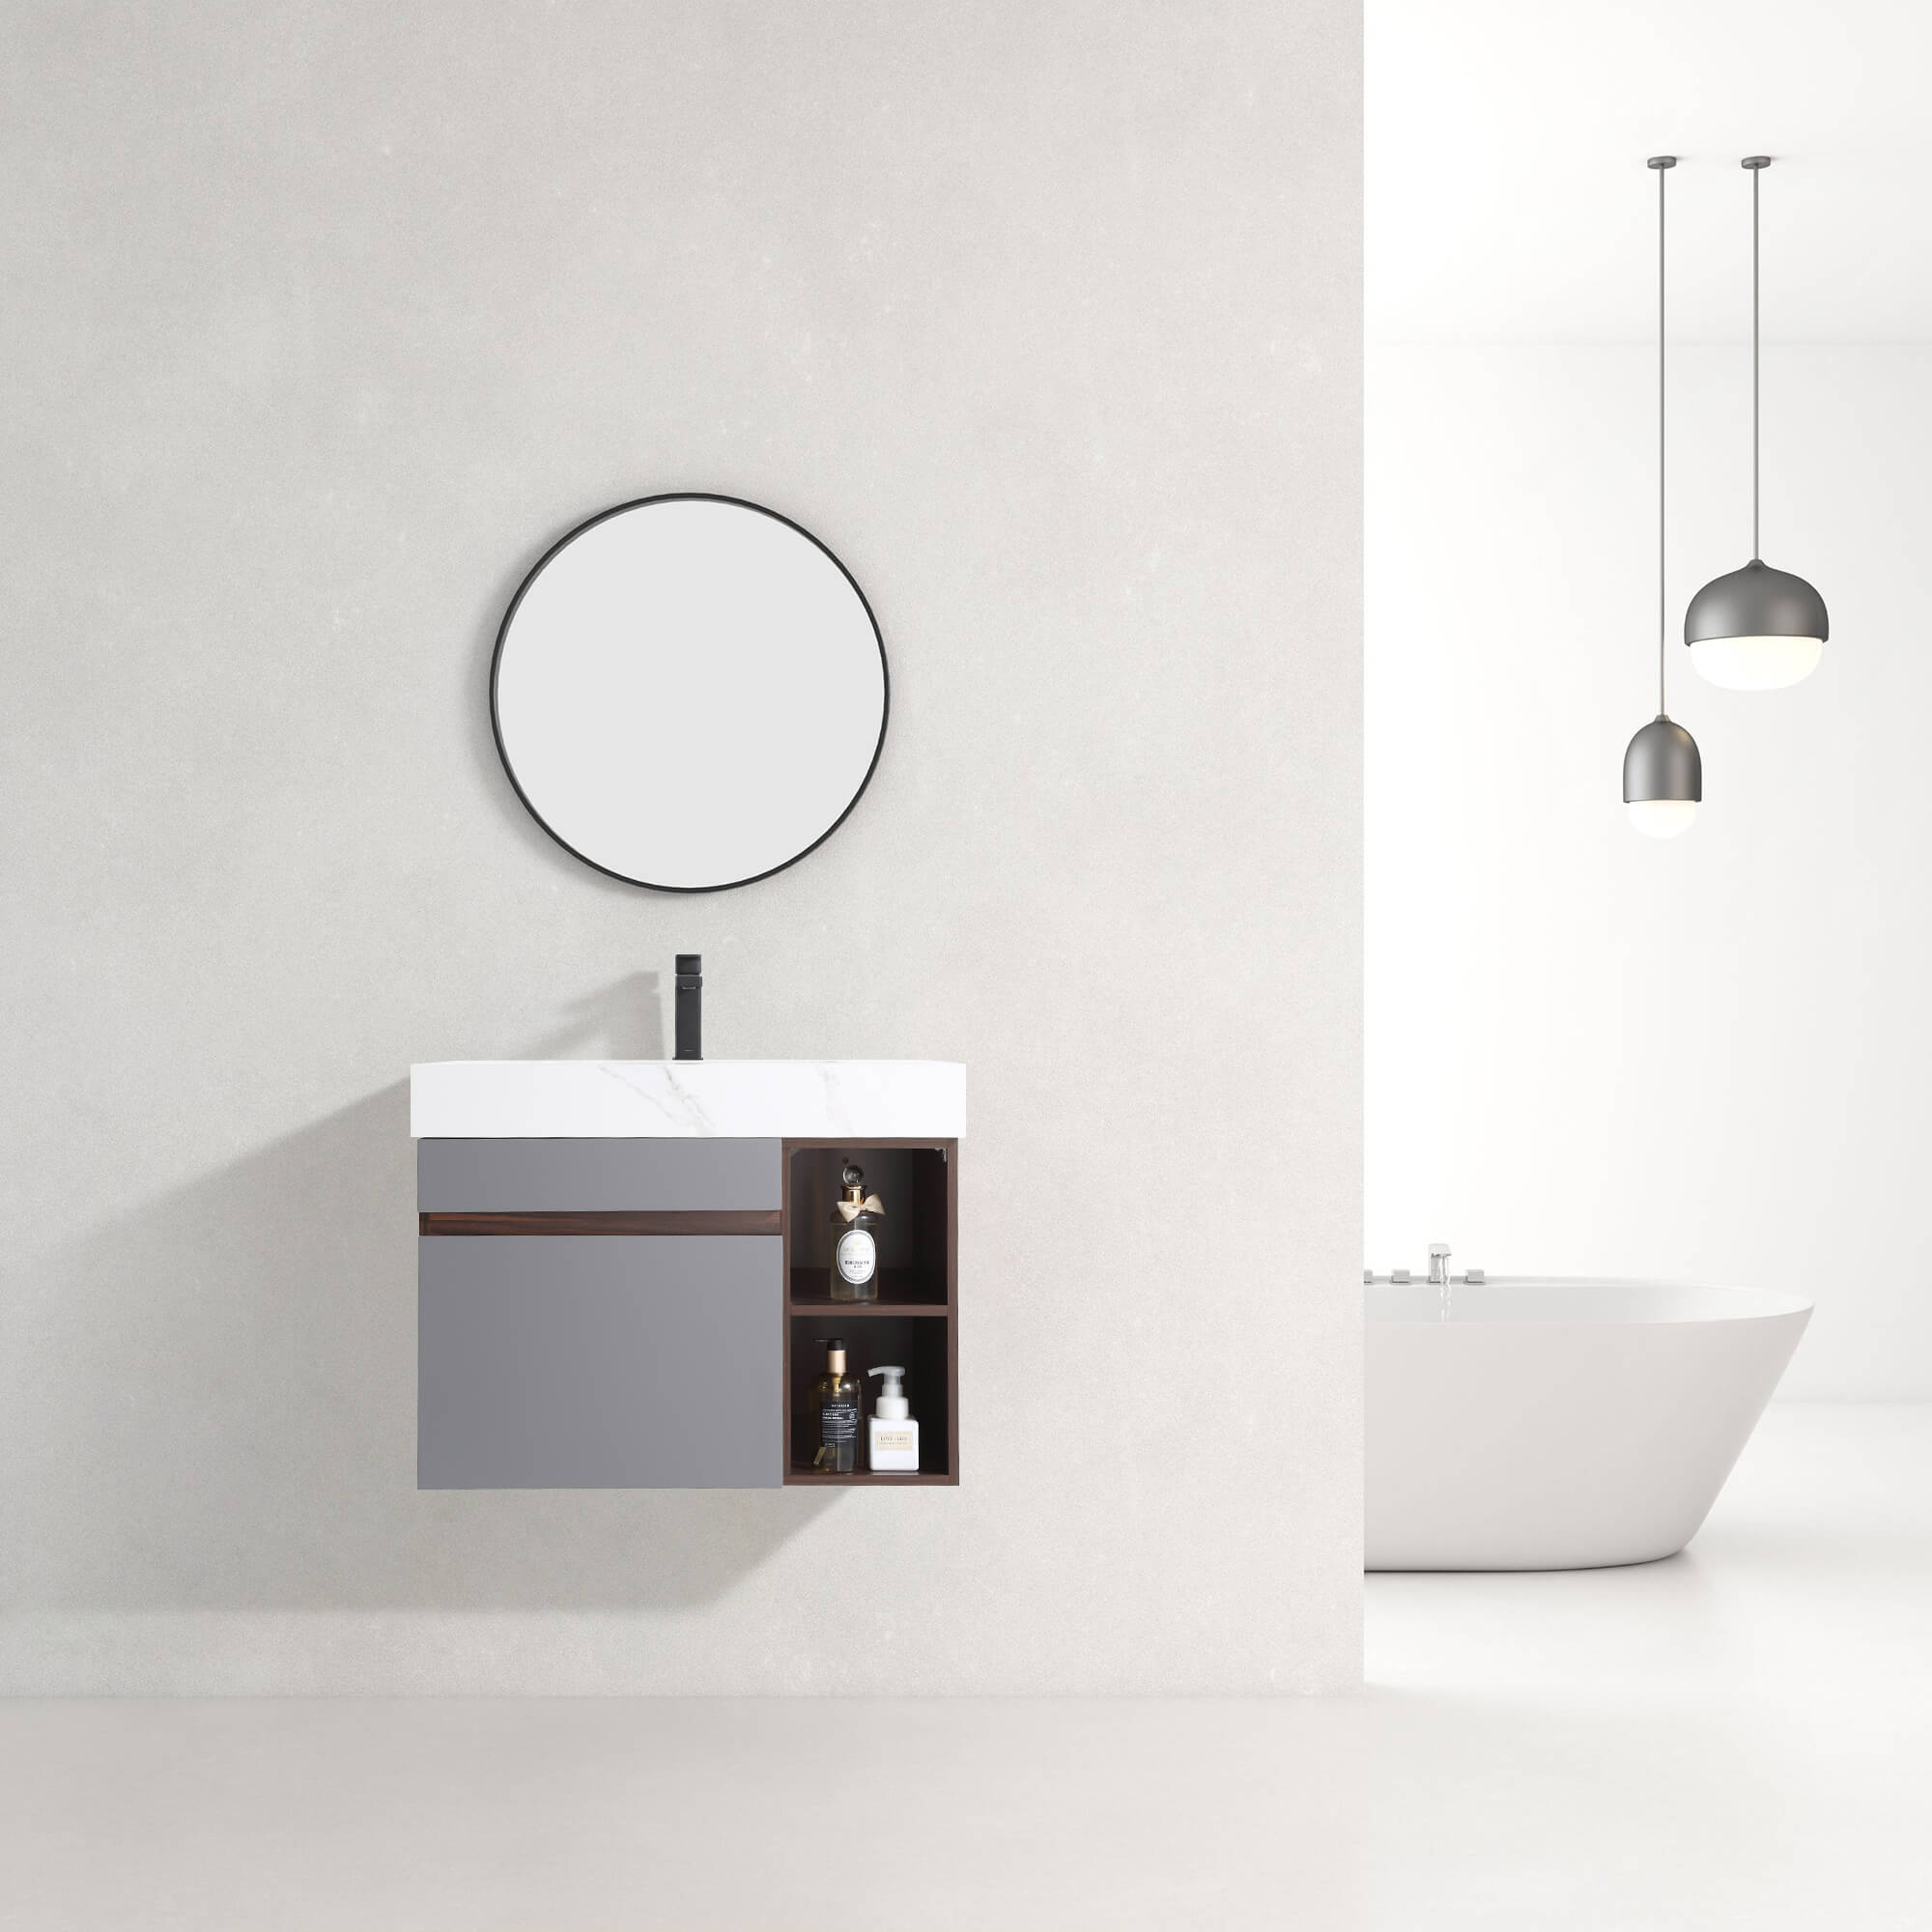 CASAINC 30-in Undermount Single Ceramic Sink Bathroom Vanity with White Engineered Stone Top